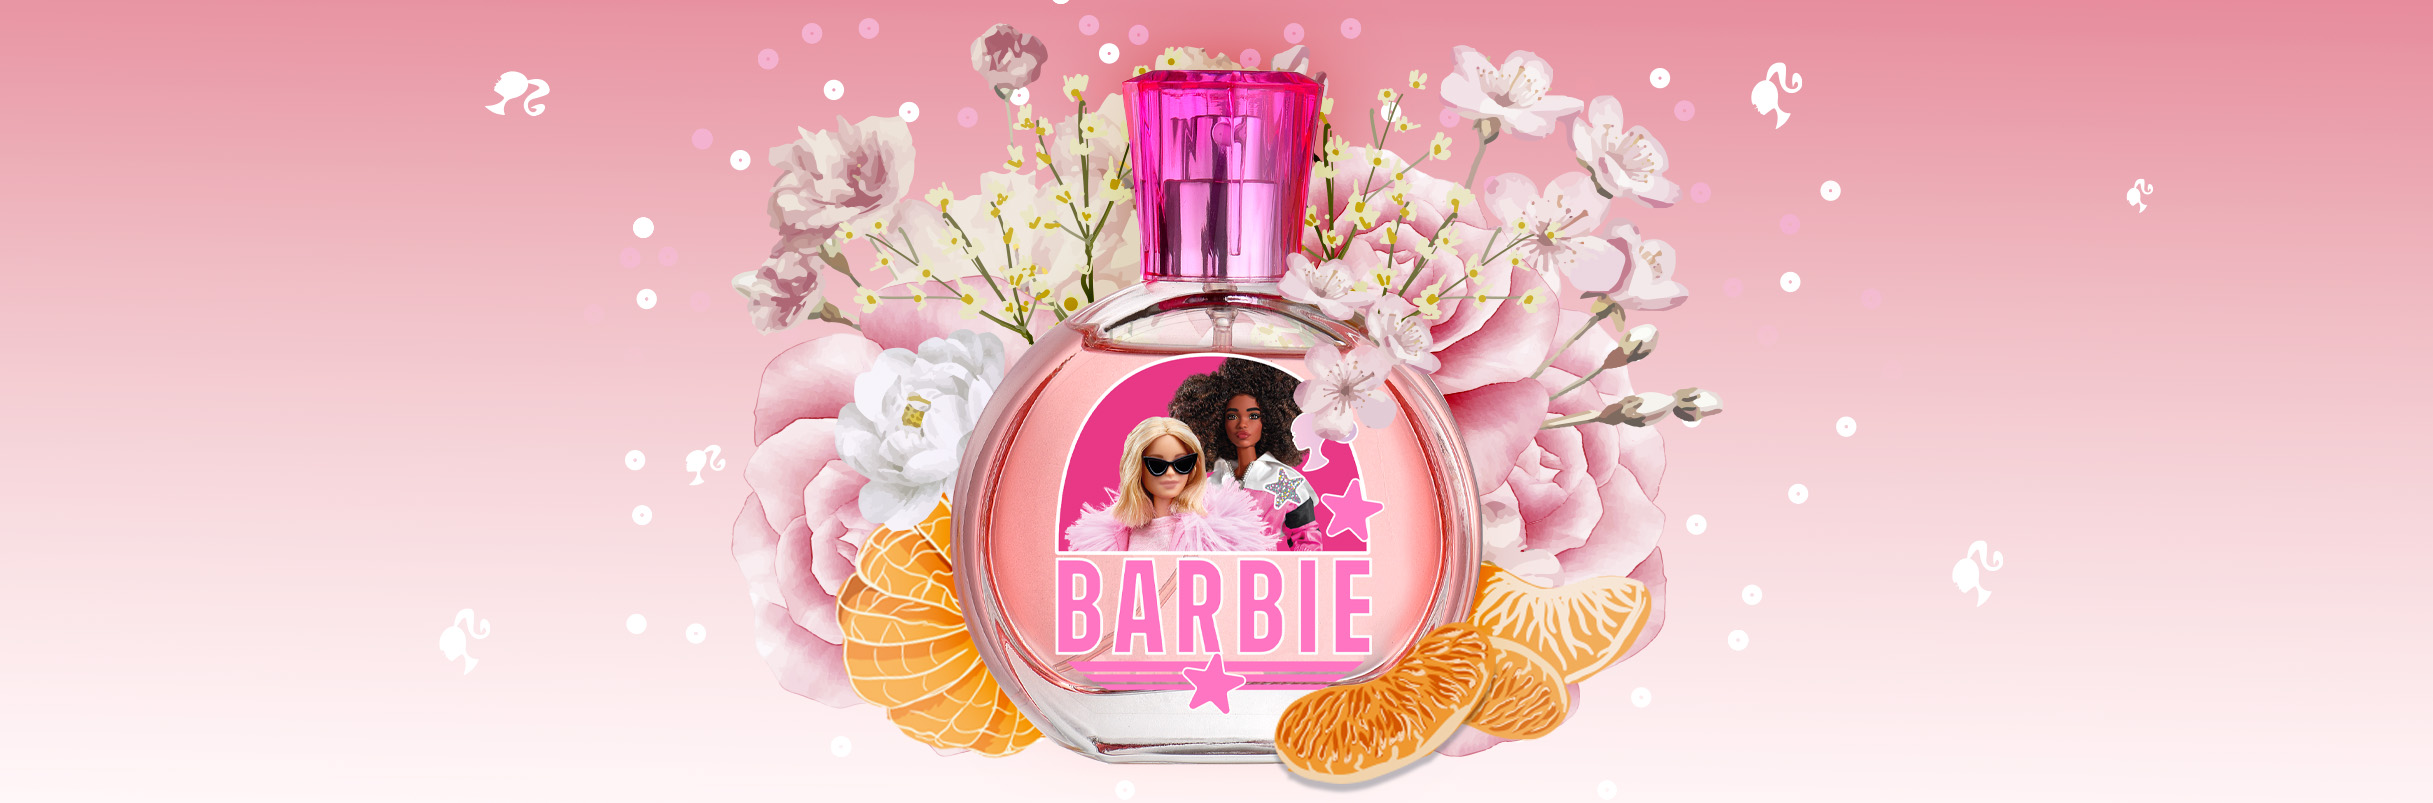 The Barbie fragrances